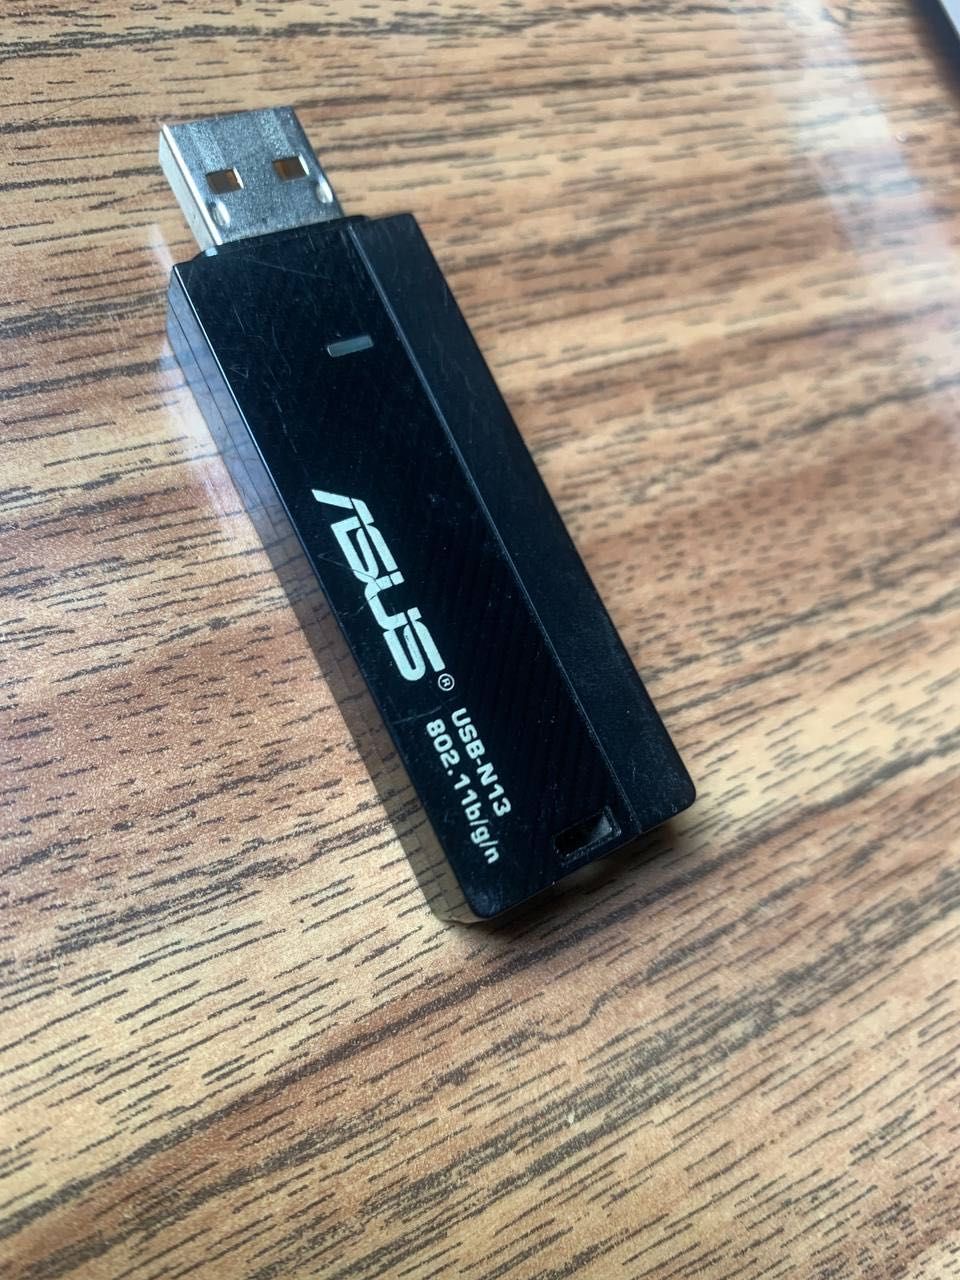 Wi-Fi адаптер ASUS USB-N13